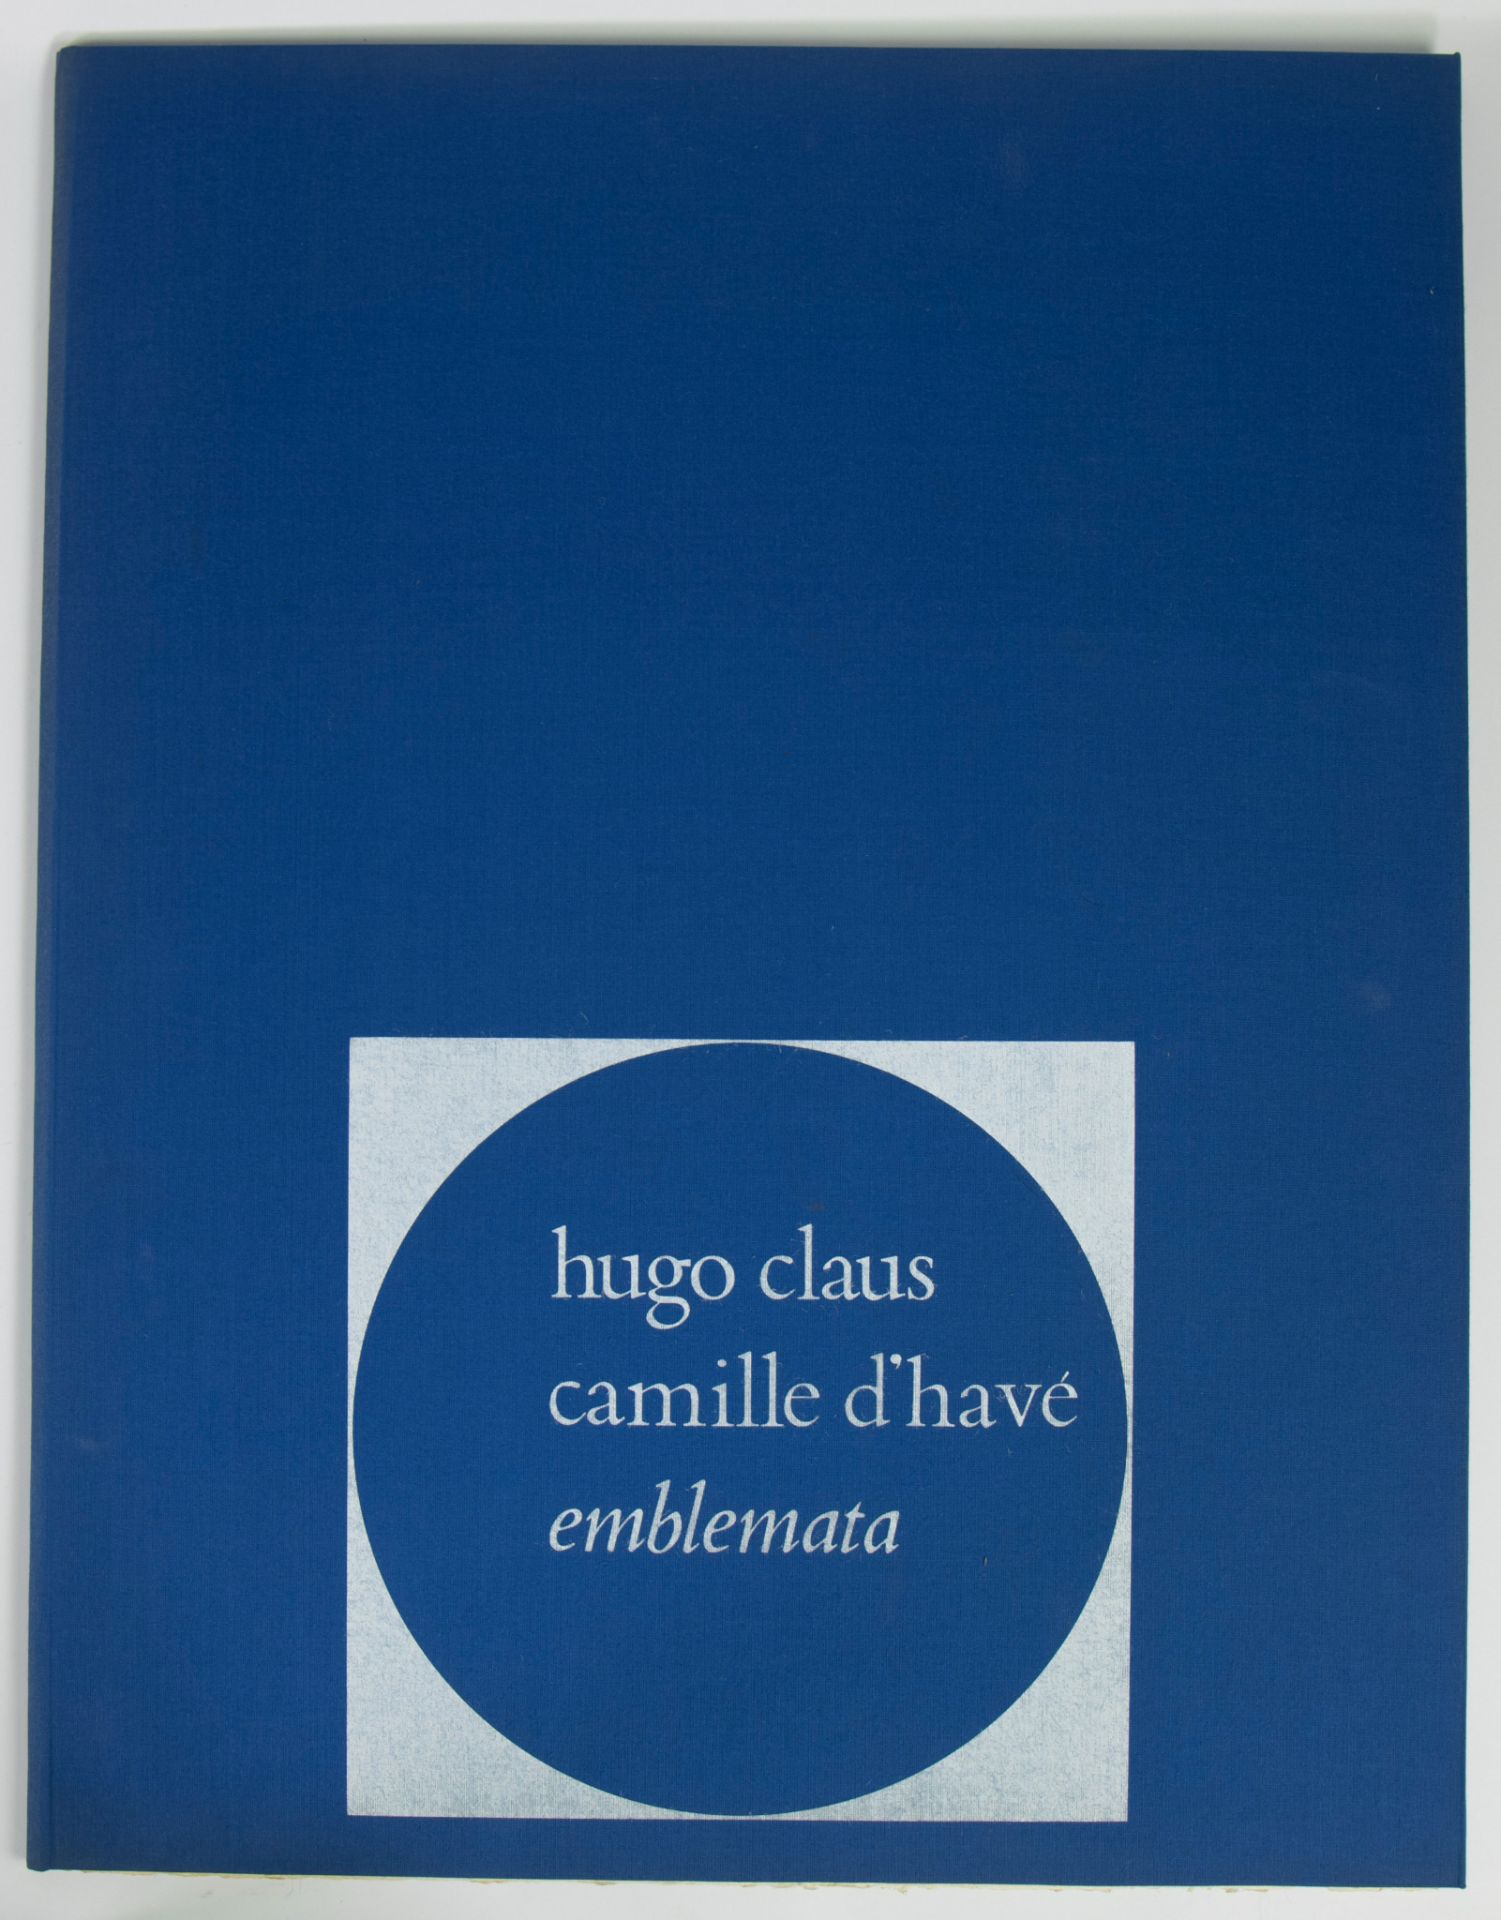 Hugo Claus & Camille D'havé emblemata